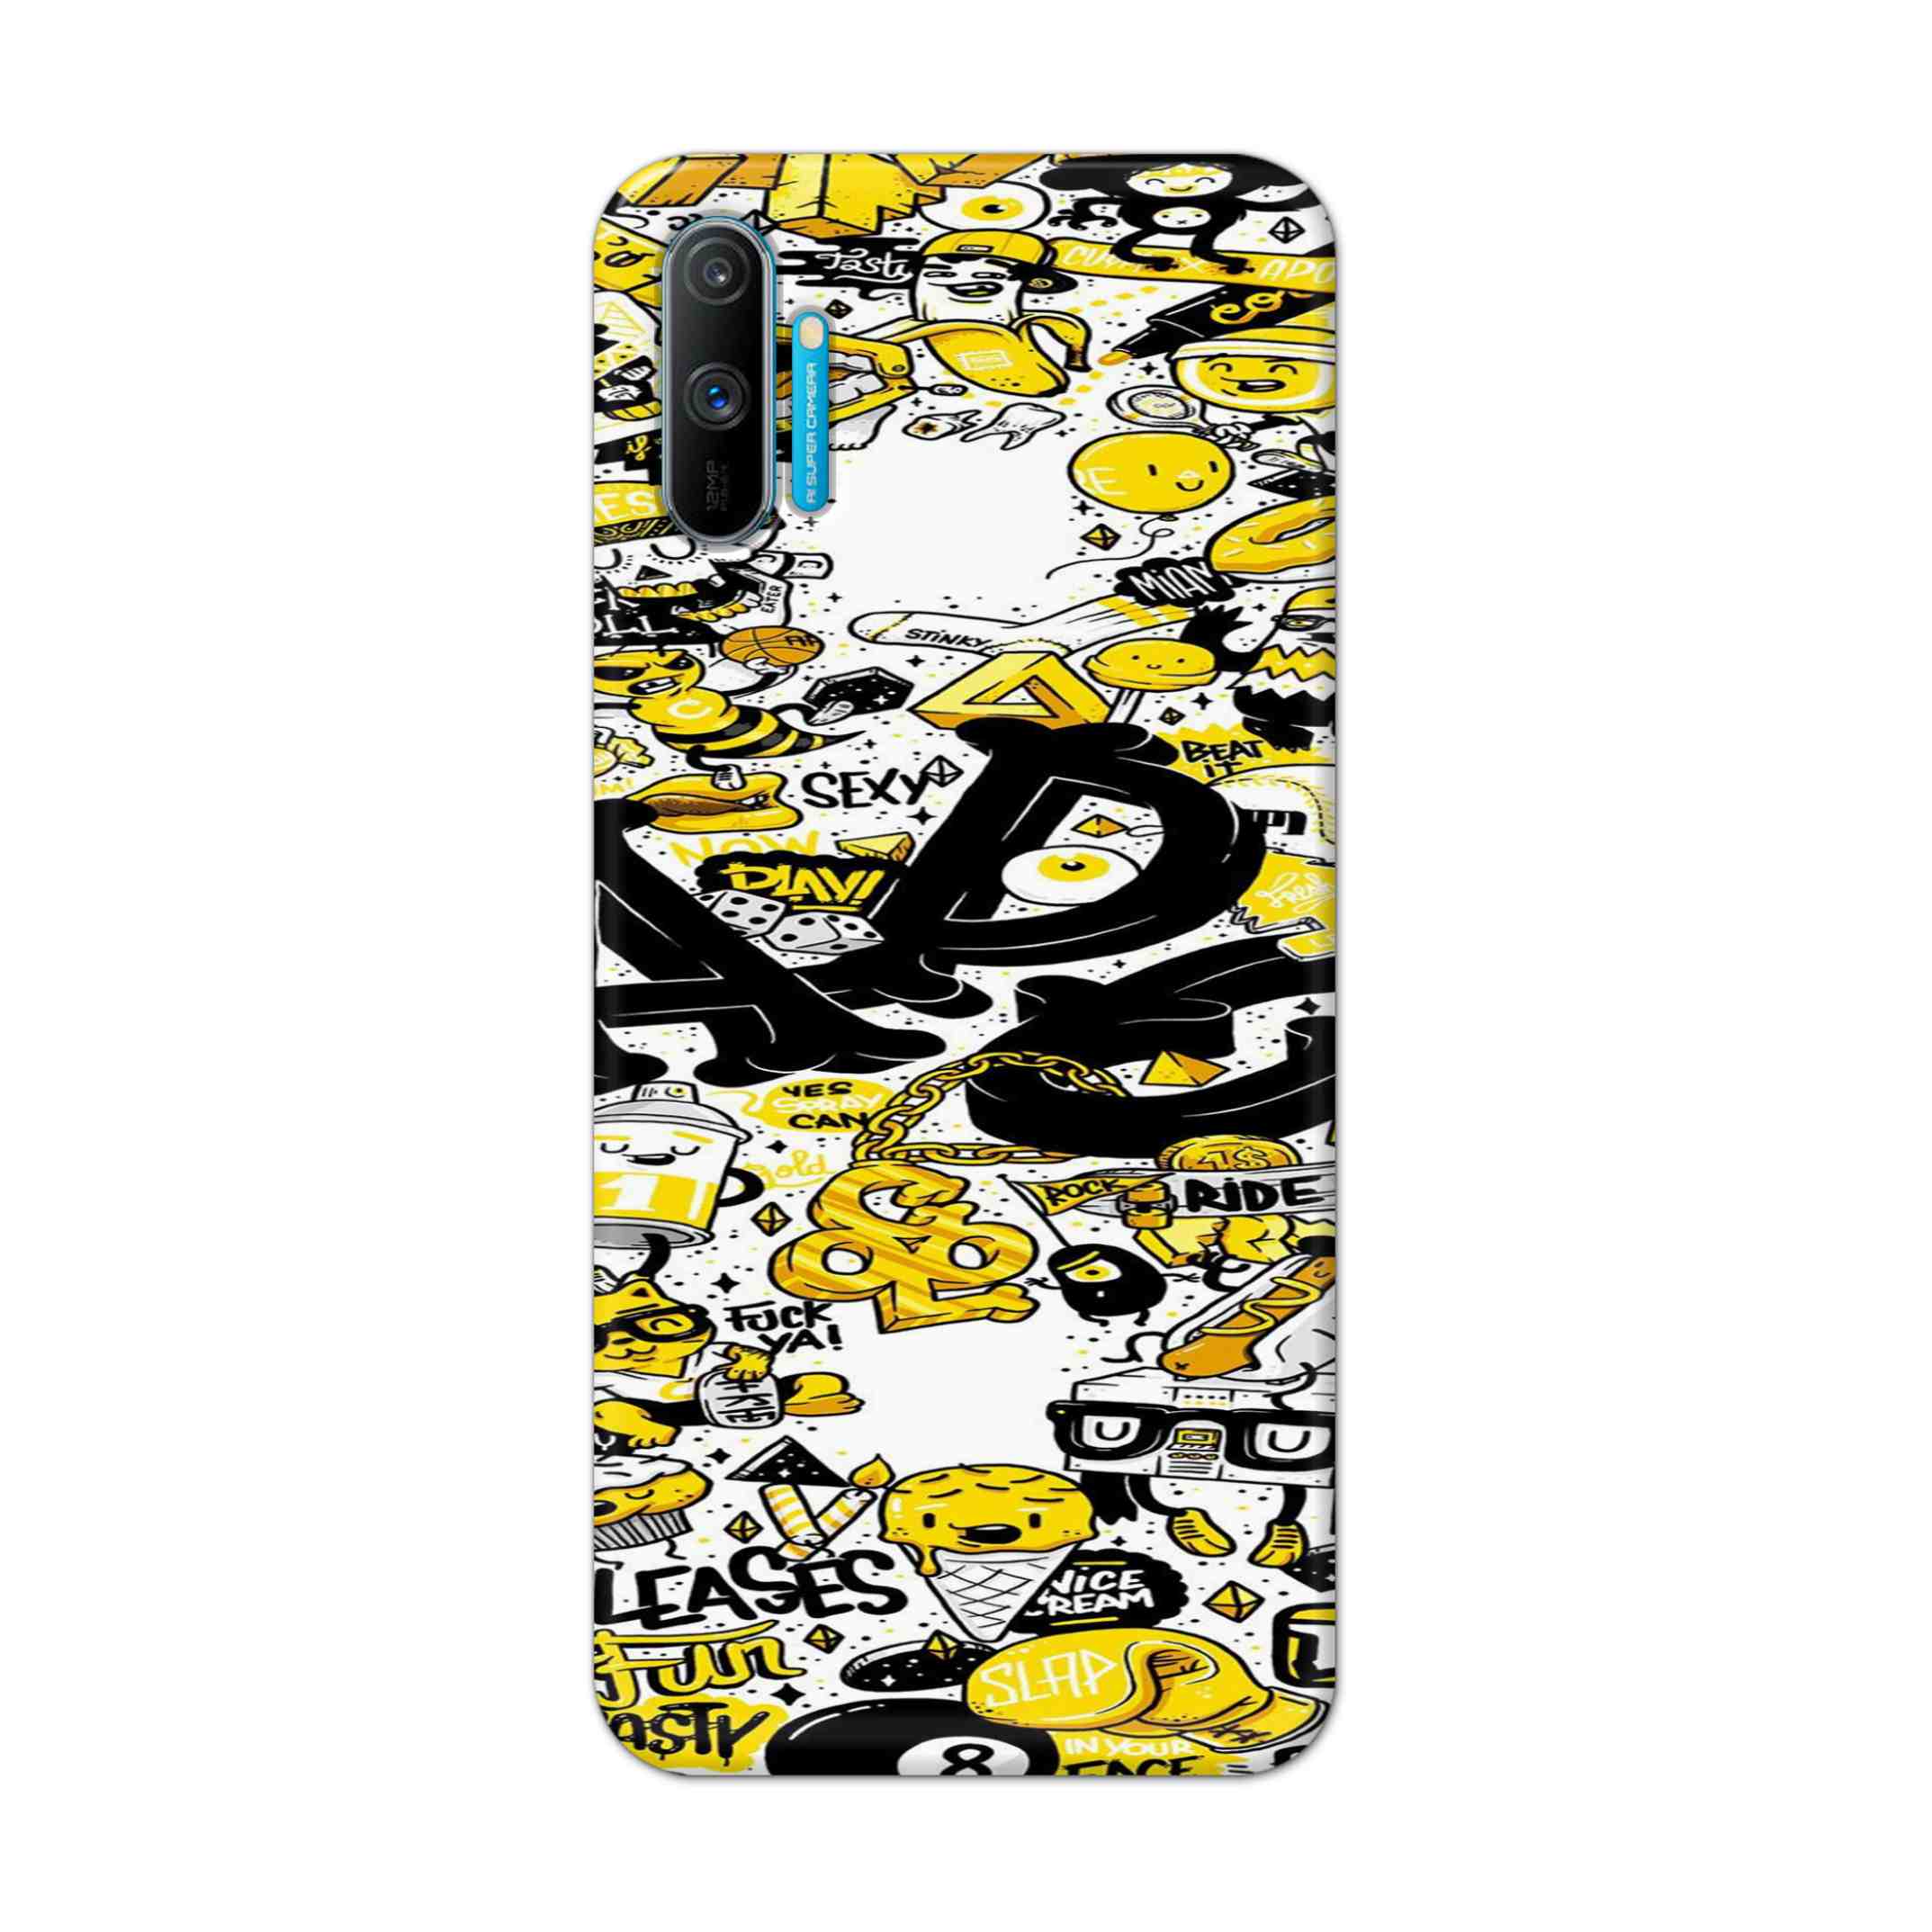 Buy Ado Hard Back Mobile Phone Case Cover For Realme C3 Online